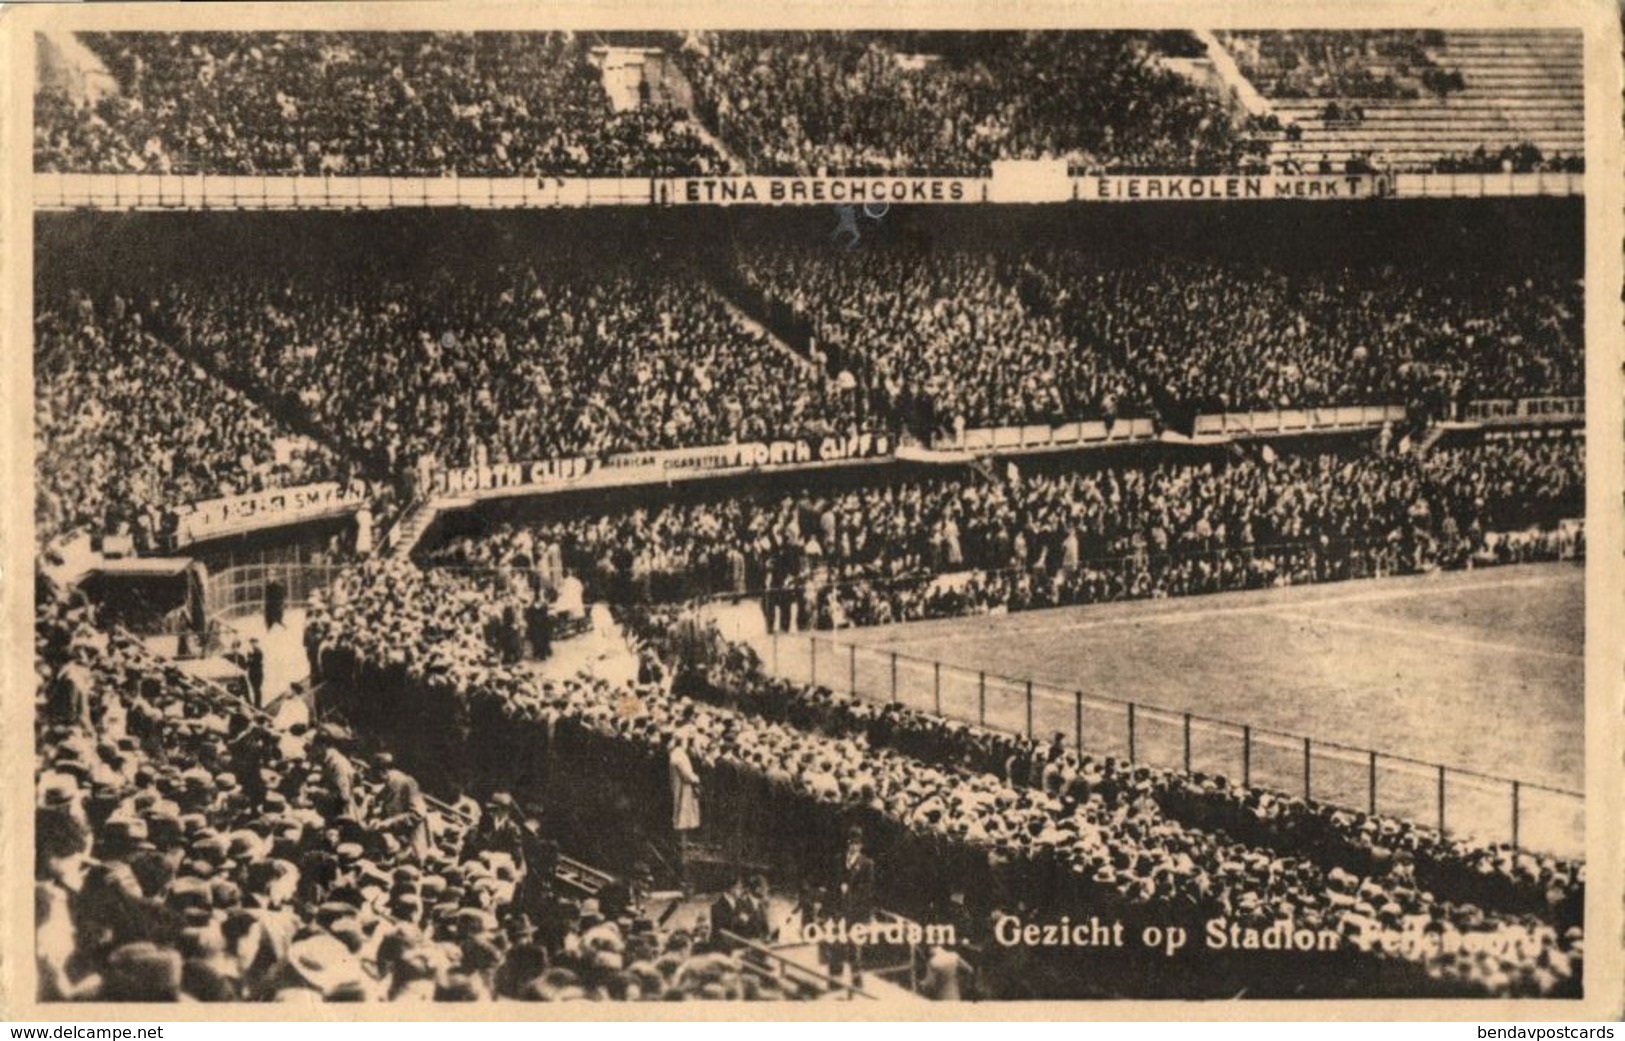 Netherlands, ROTTERDAM, Stadion Feyenoord De Kuip (1950s) Stadium Postcard - Voetbal